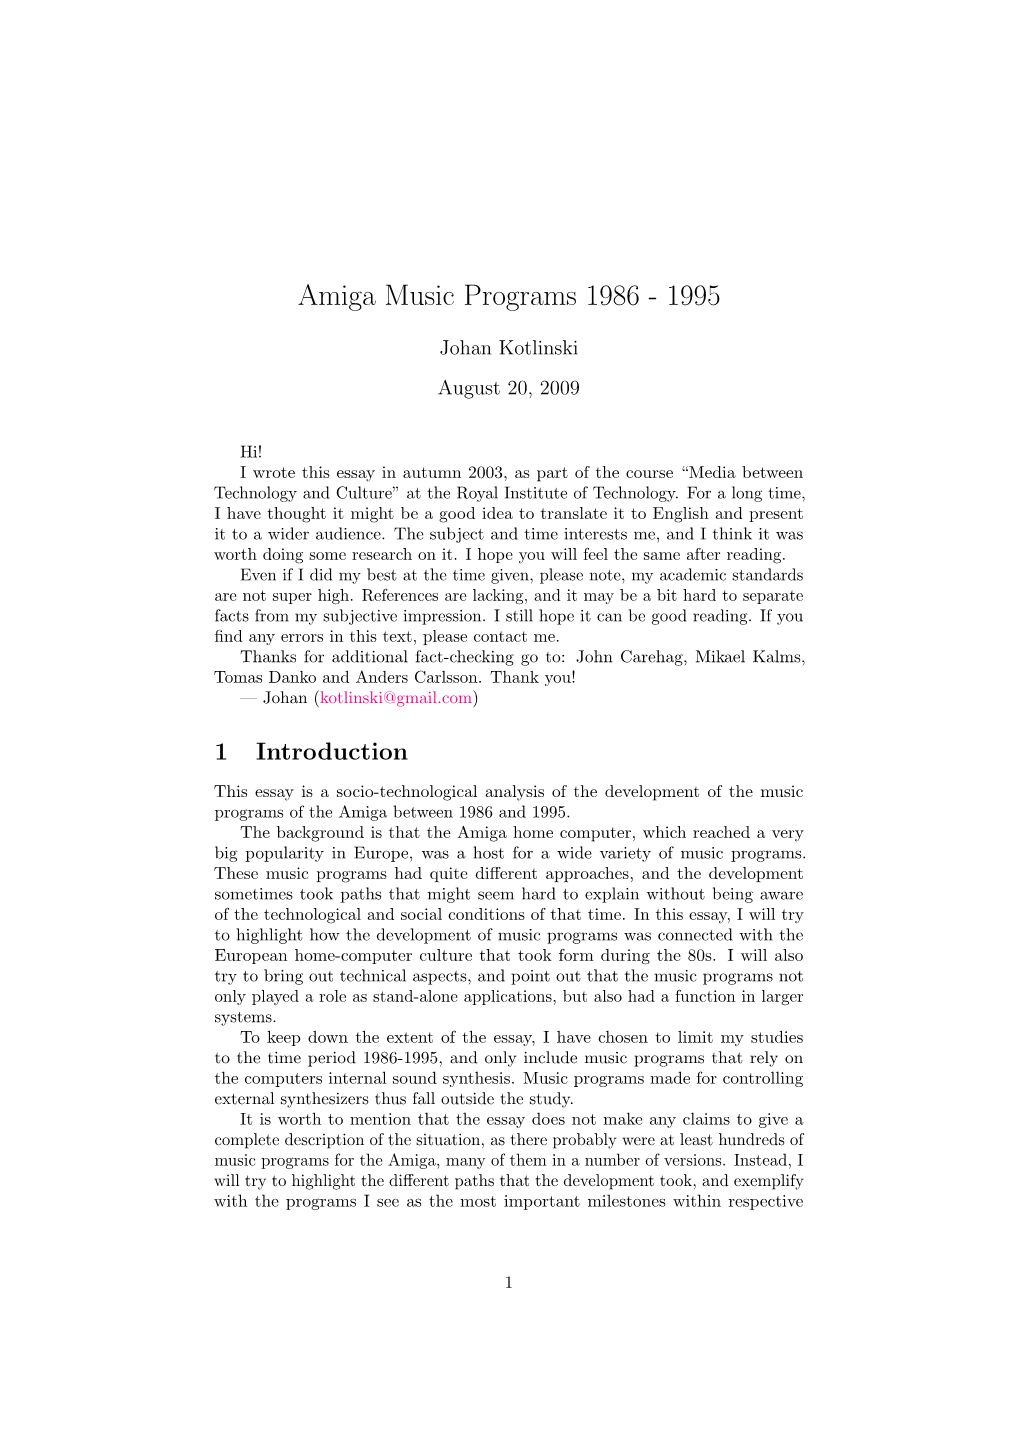 "Amiga Music Programs 1986